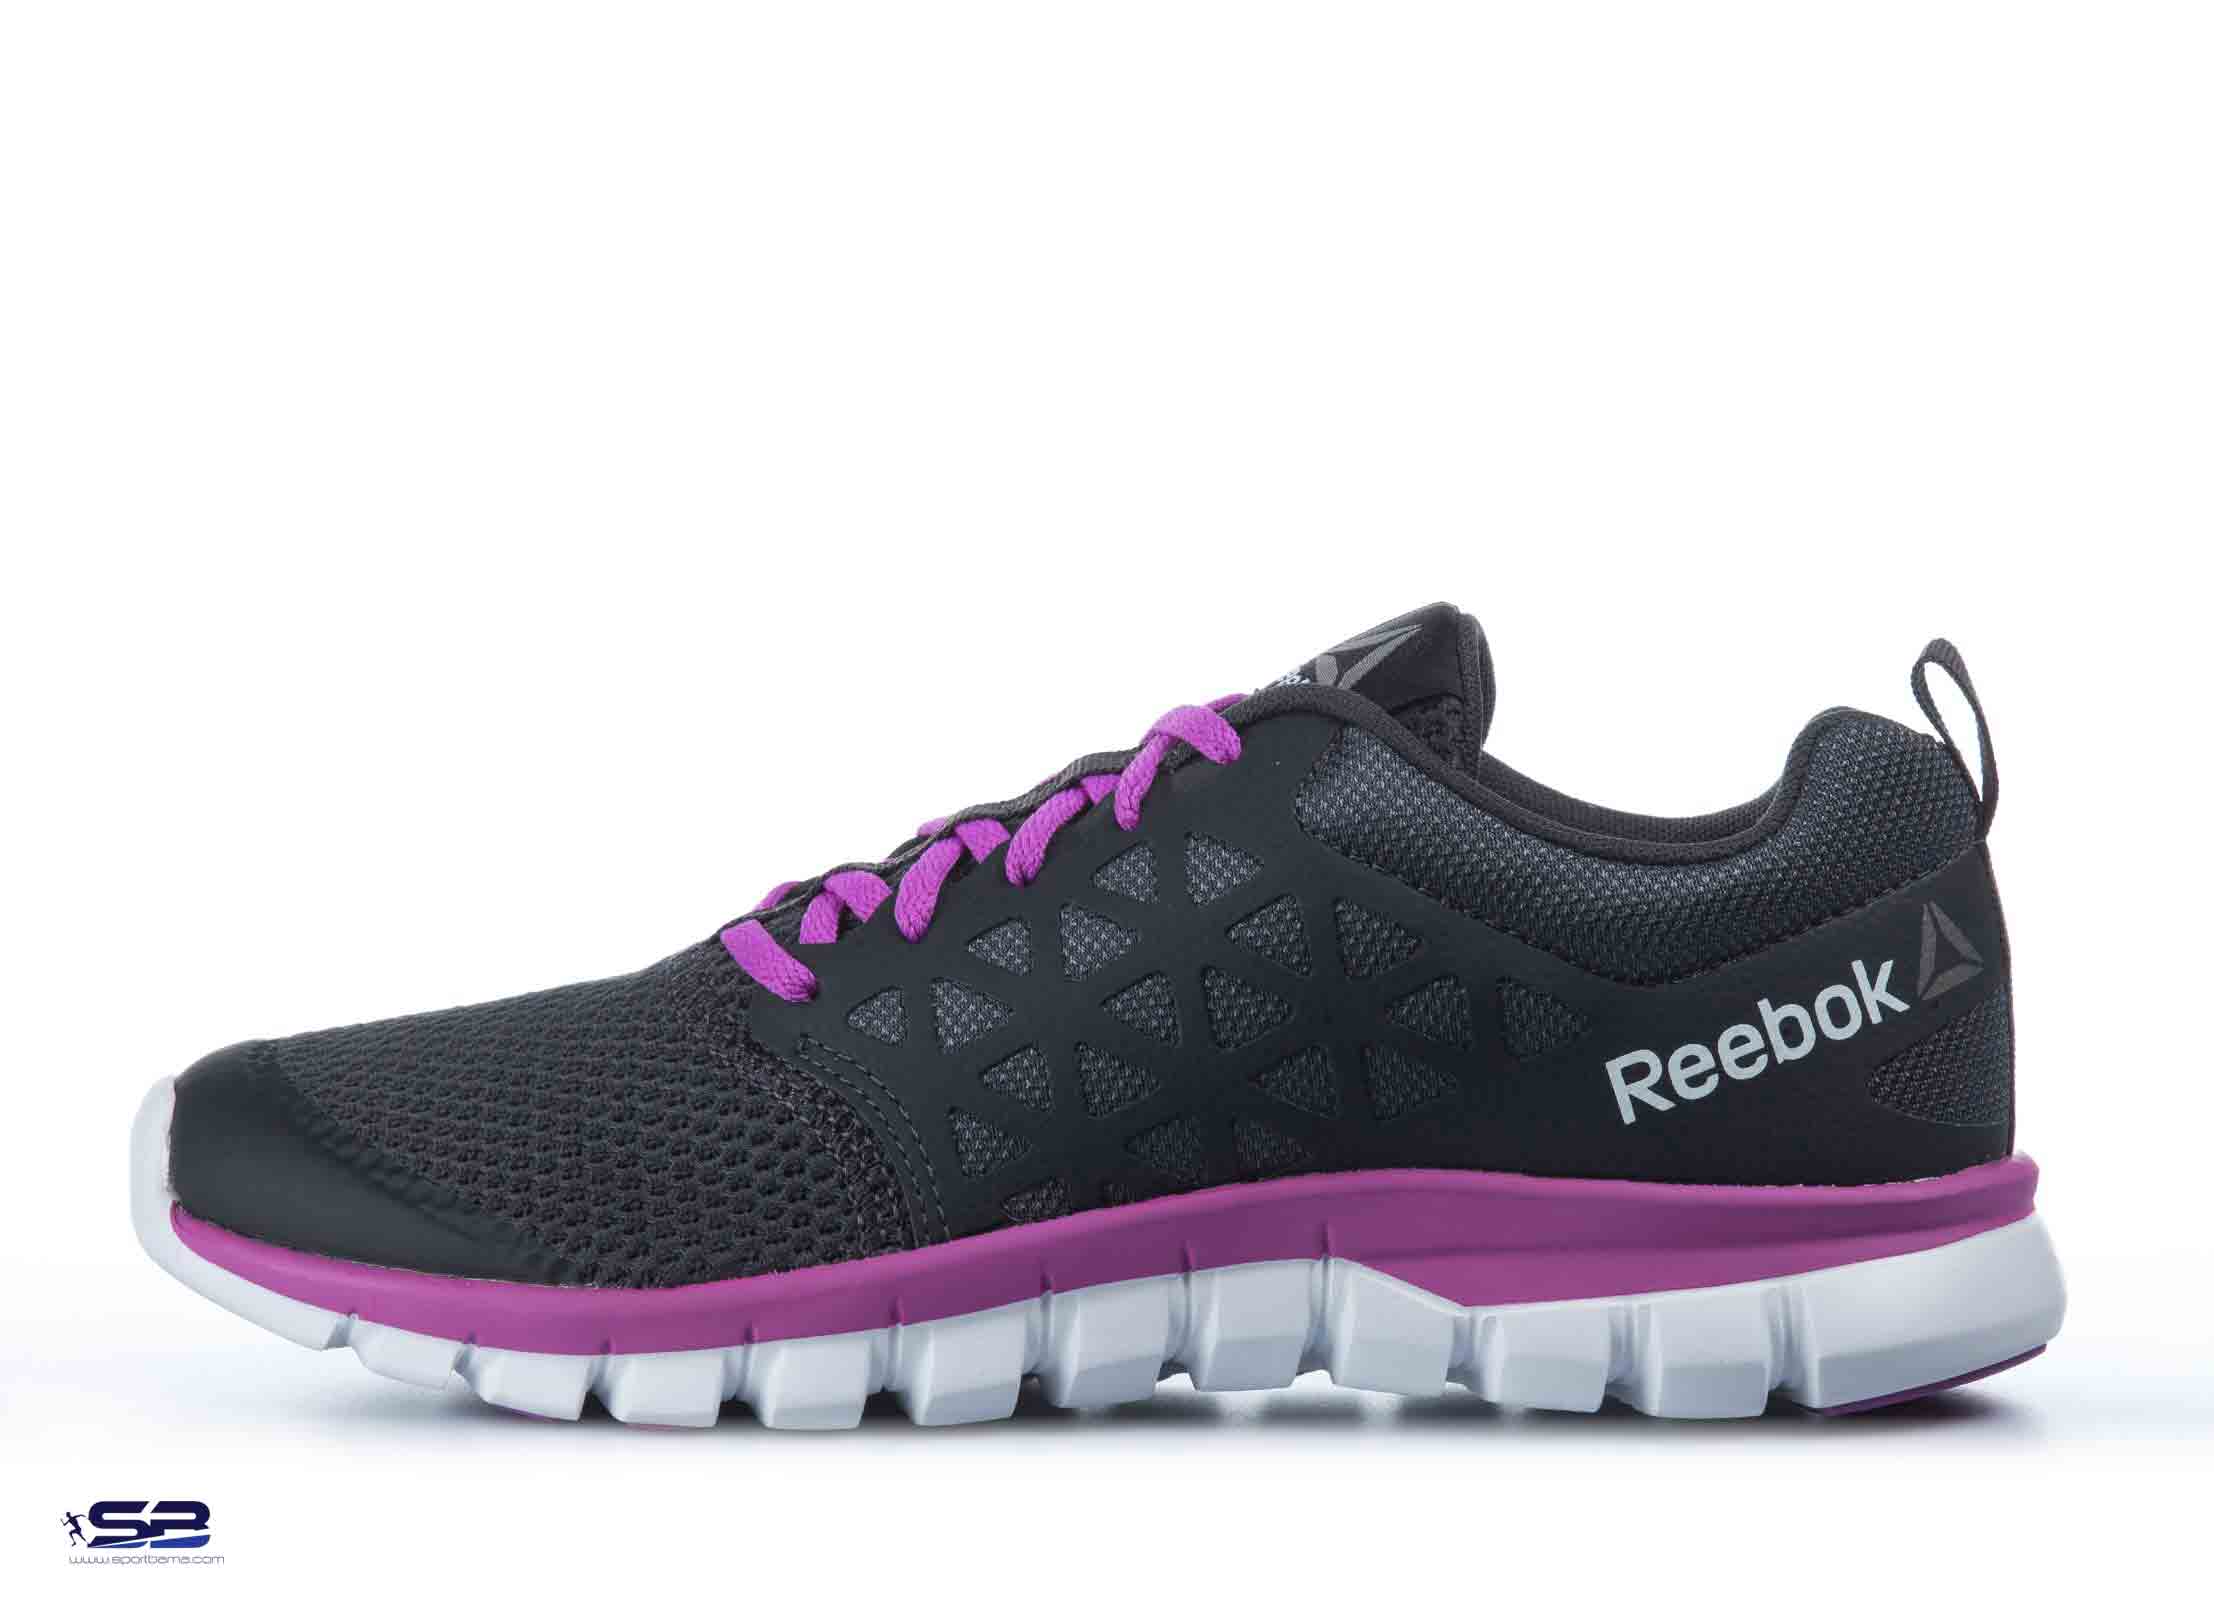  خرید  کفش کتانی اورجینال ریباک     Reebok Running Shoes BS8709  